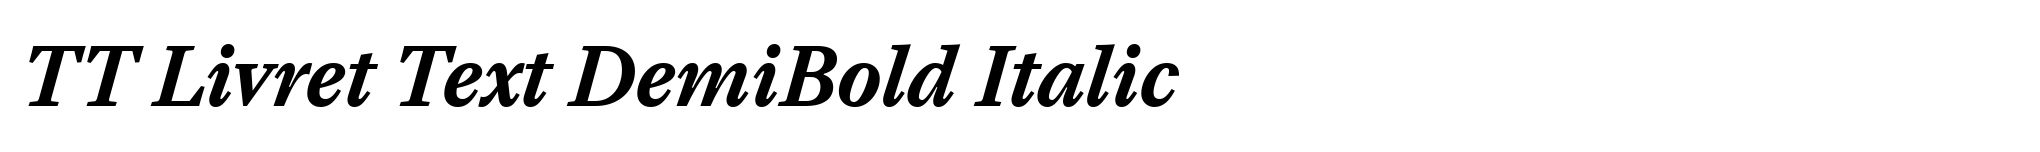 TT Livret Text DemiBold Italic image